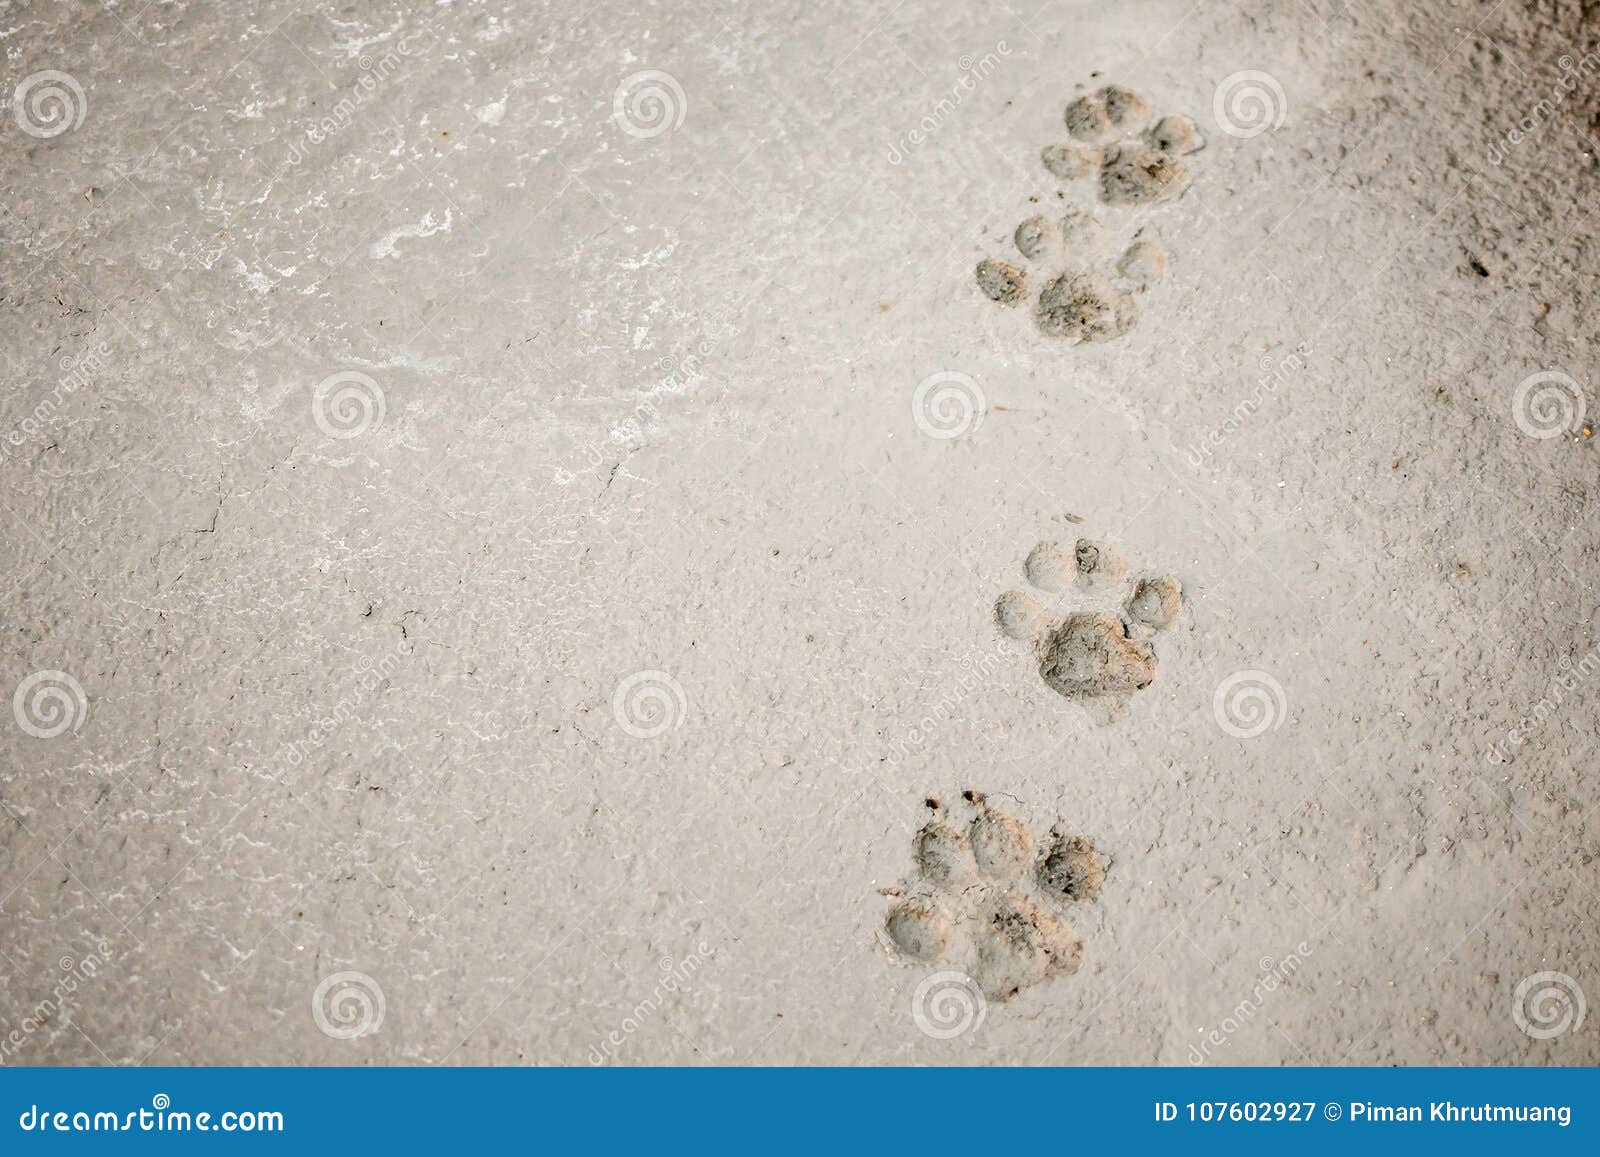 Dog Footprints On Cement Concrete Floor Stock Image - Image of design